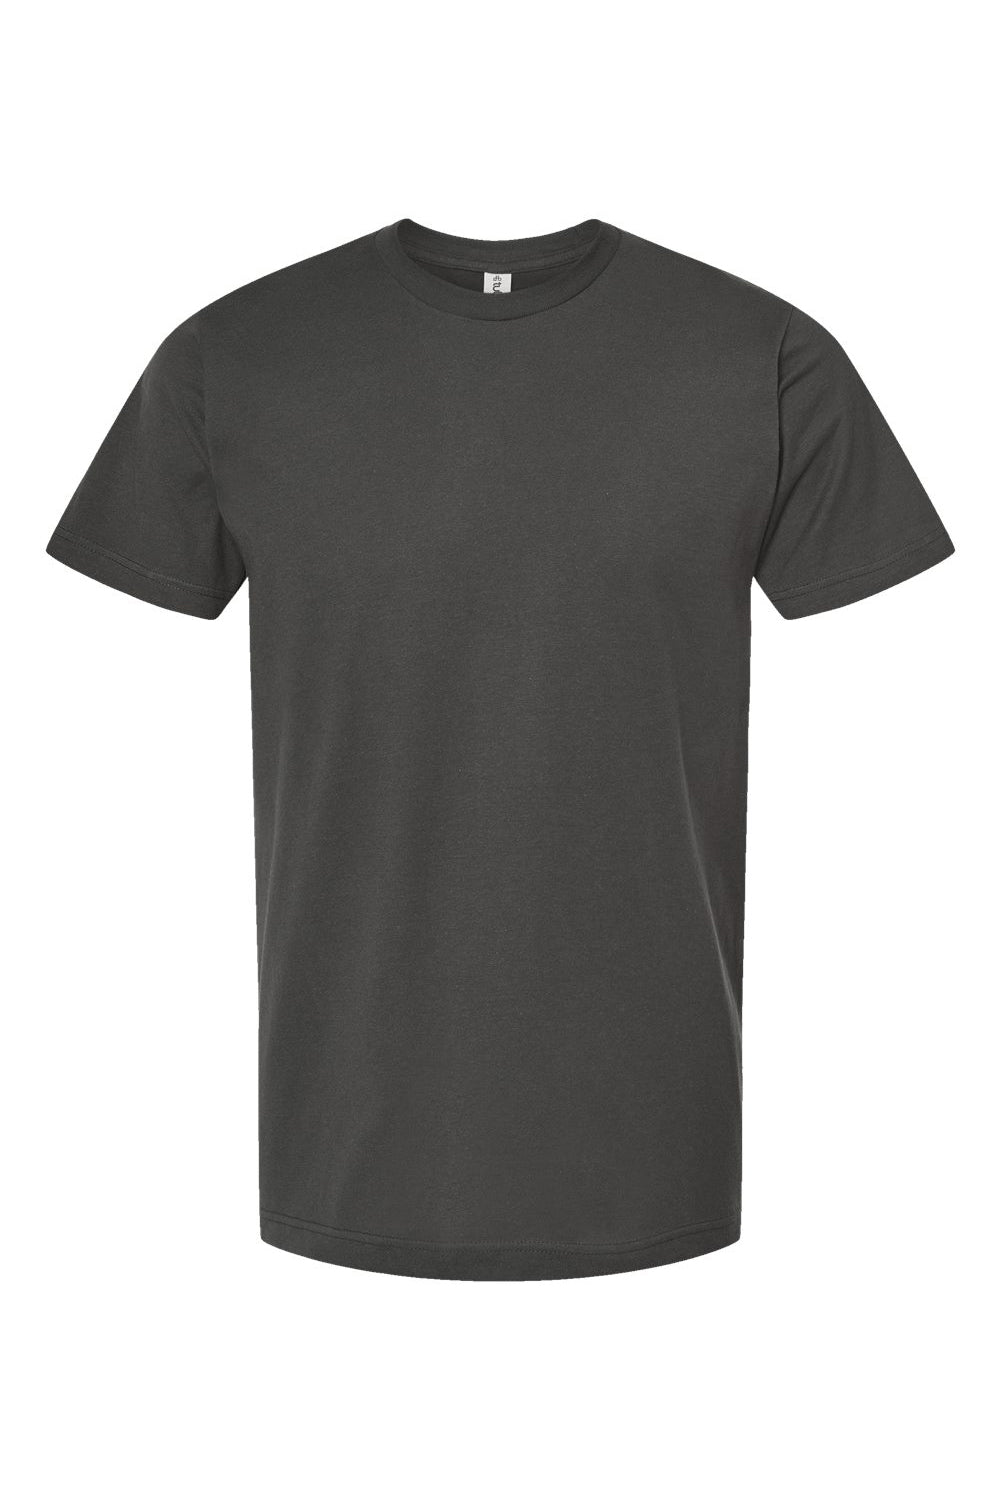 Tultex 202 Mens Fine Jersey Short Sleeve Crewneck T-Shirt Charcoal Grey Flat Front